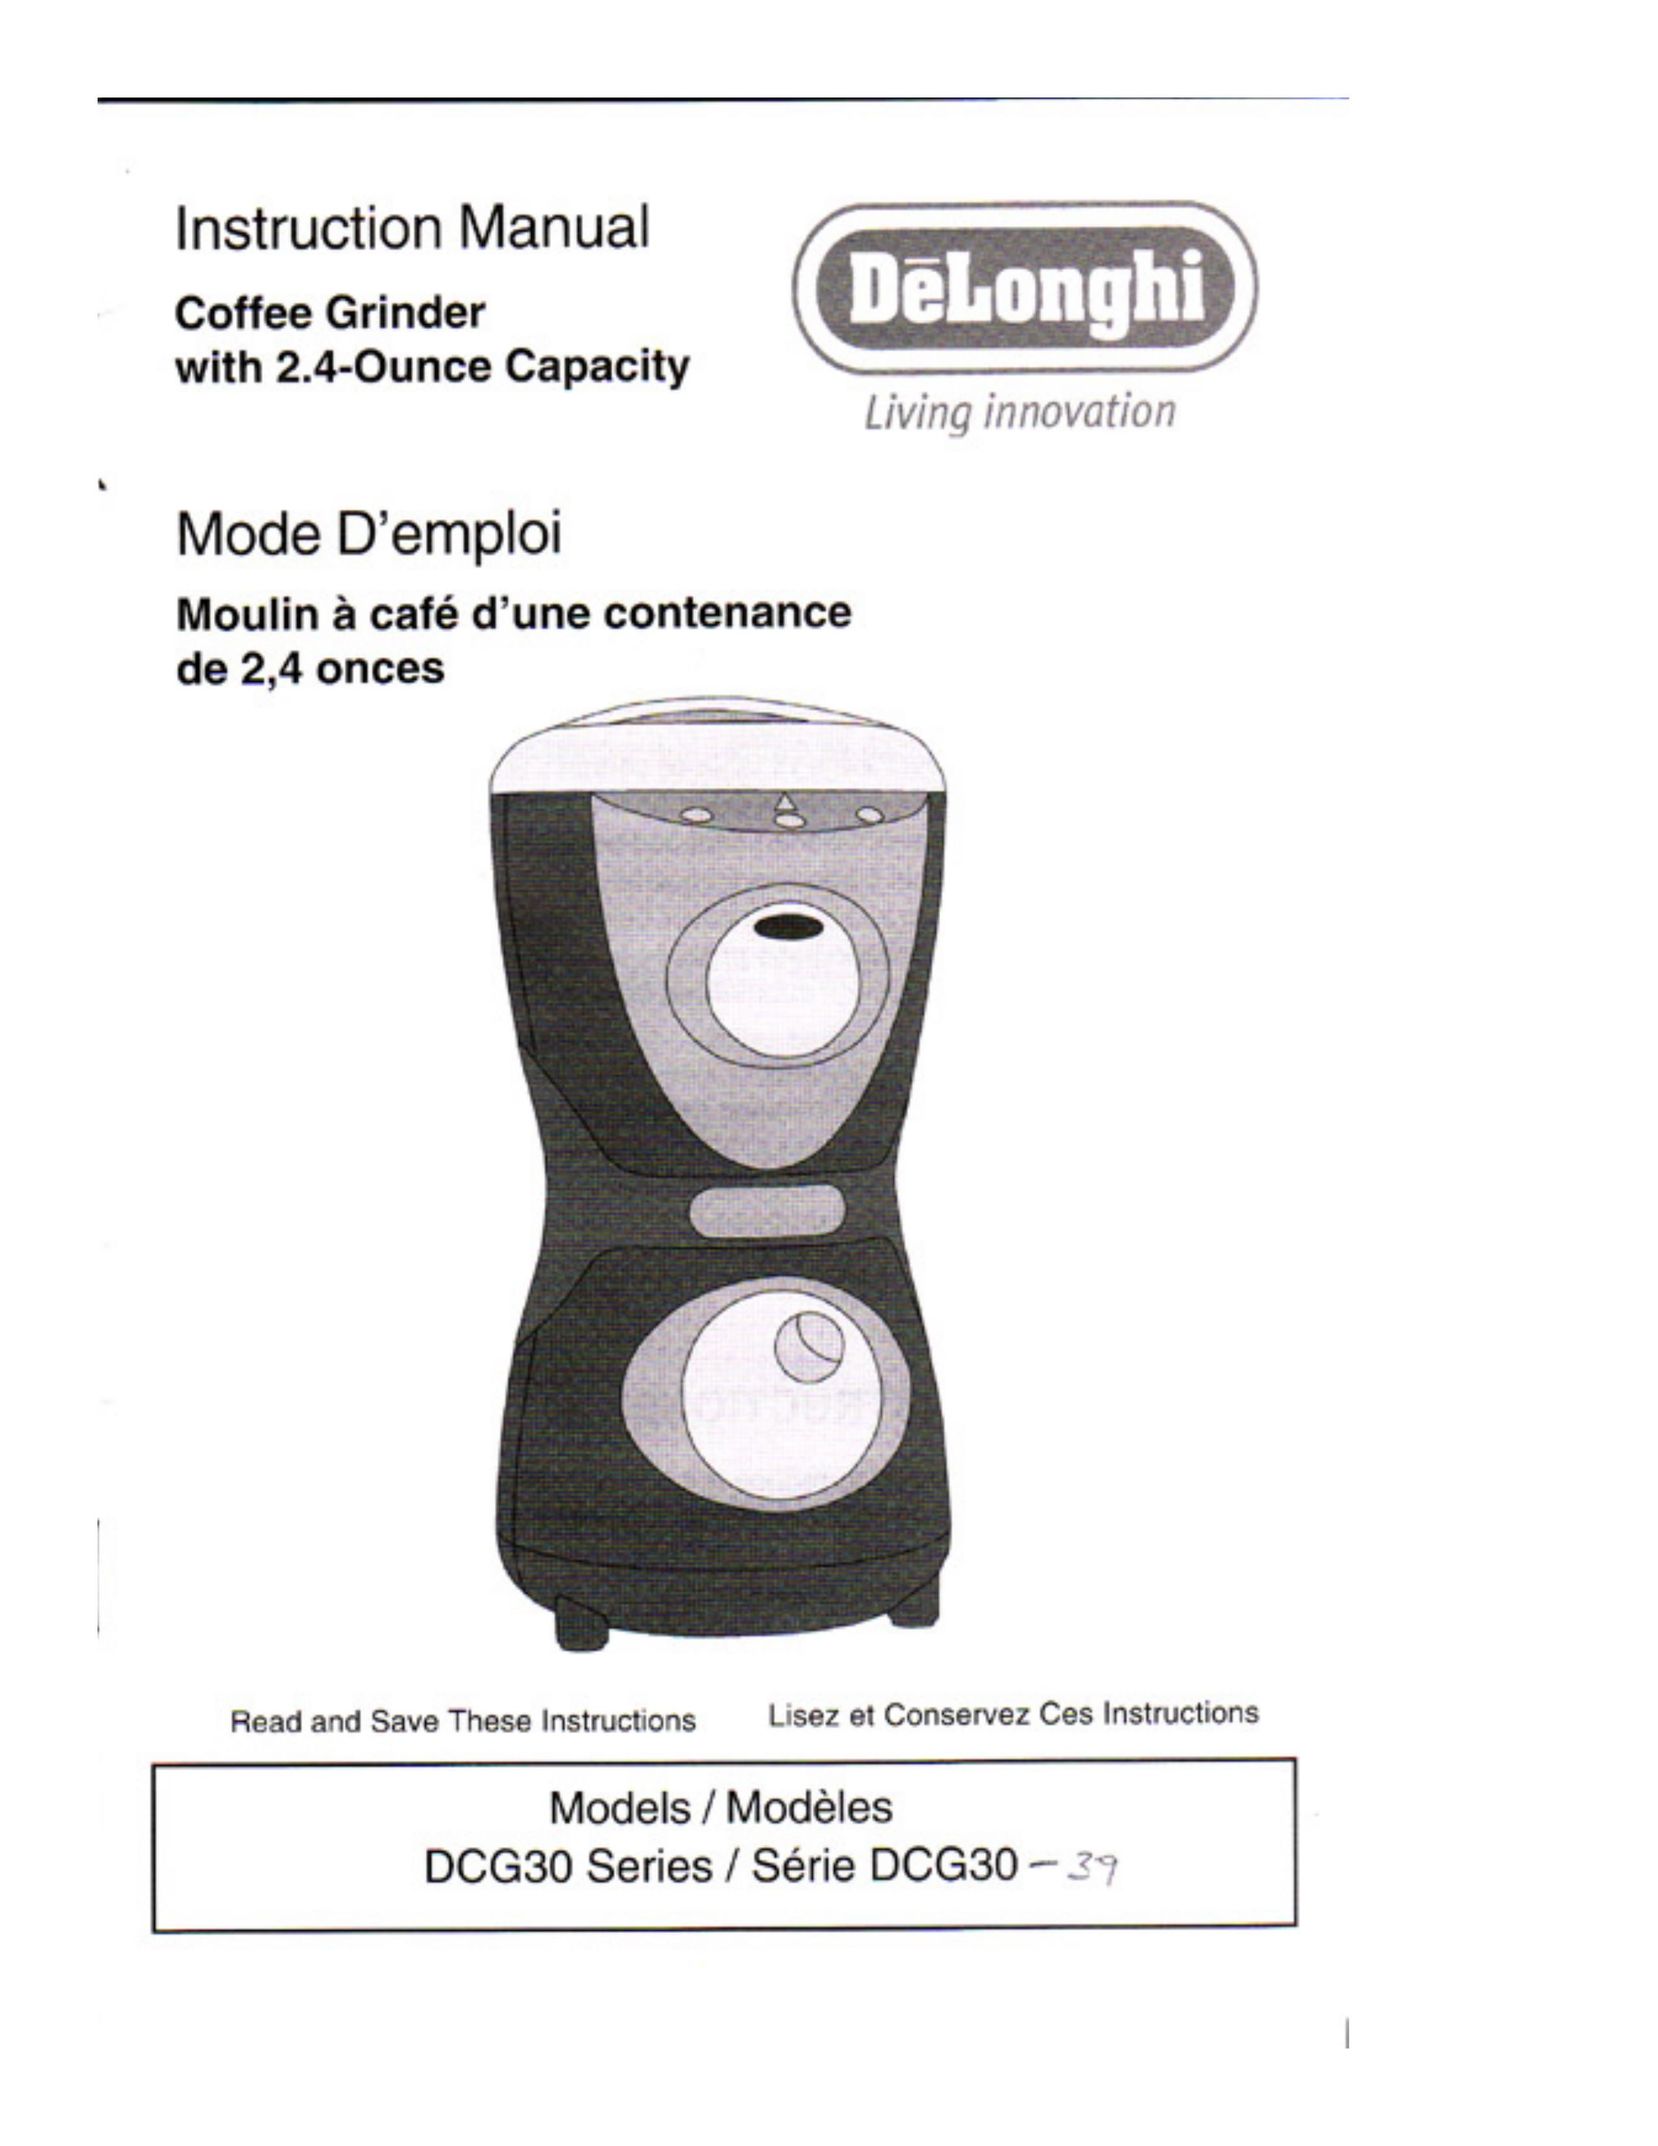 DeLonghi DCG30 Series Coffee Grinder User Manual